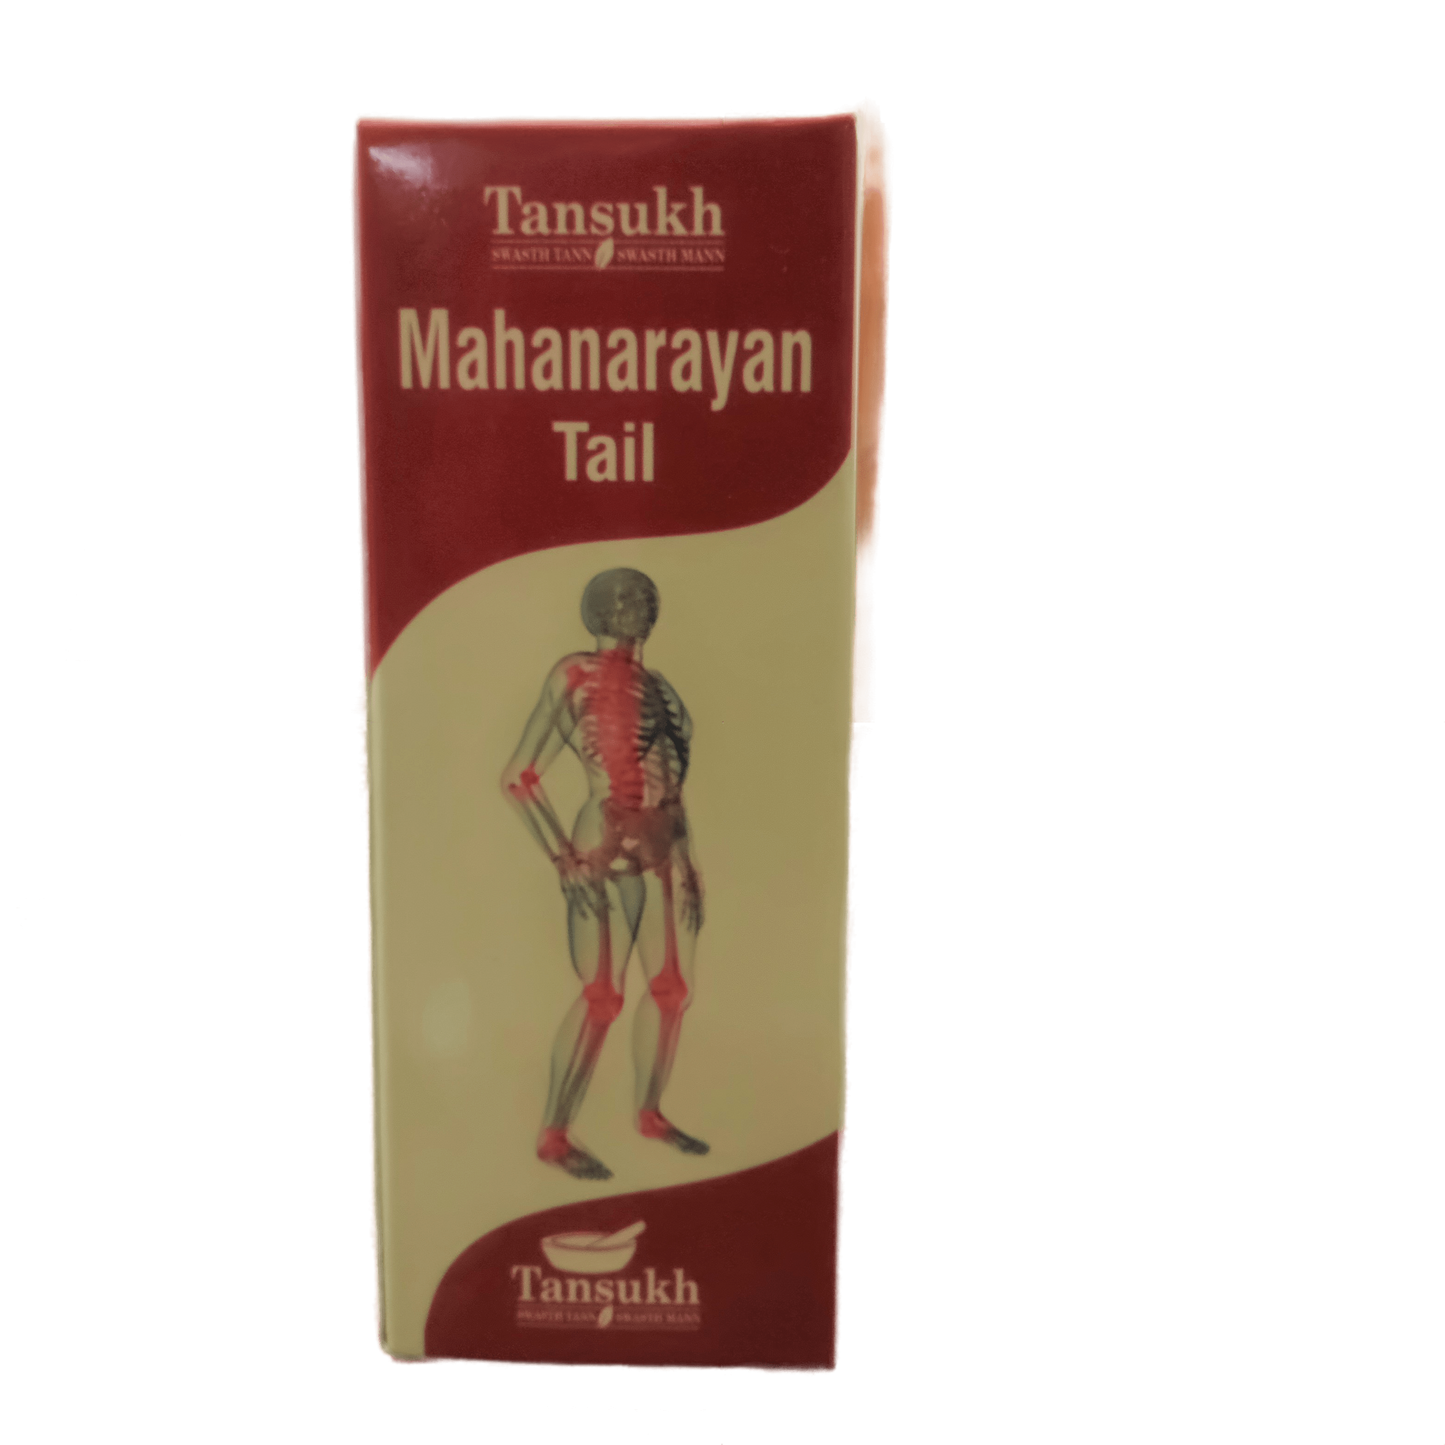 Mahanarayan Tail